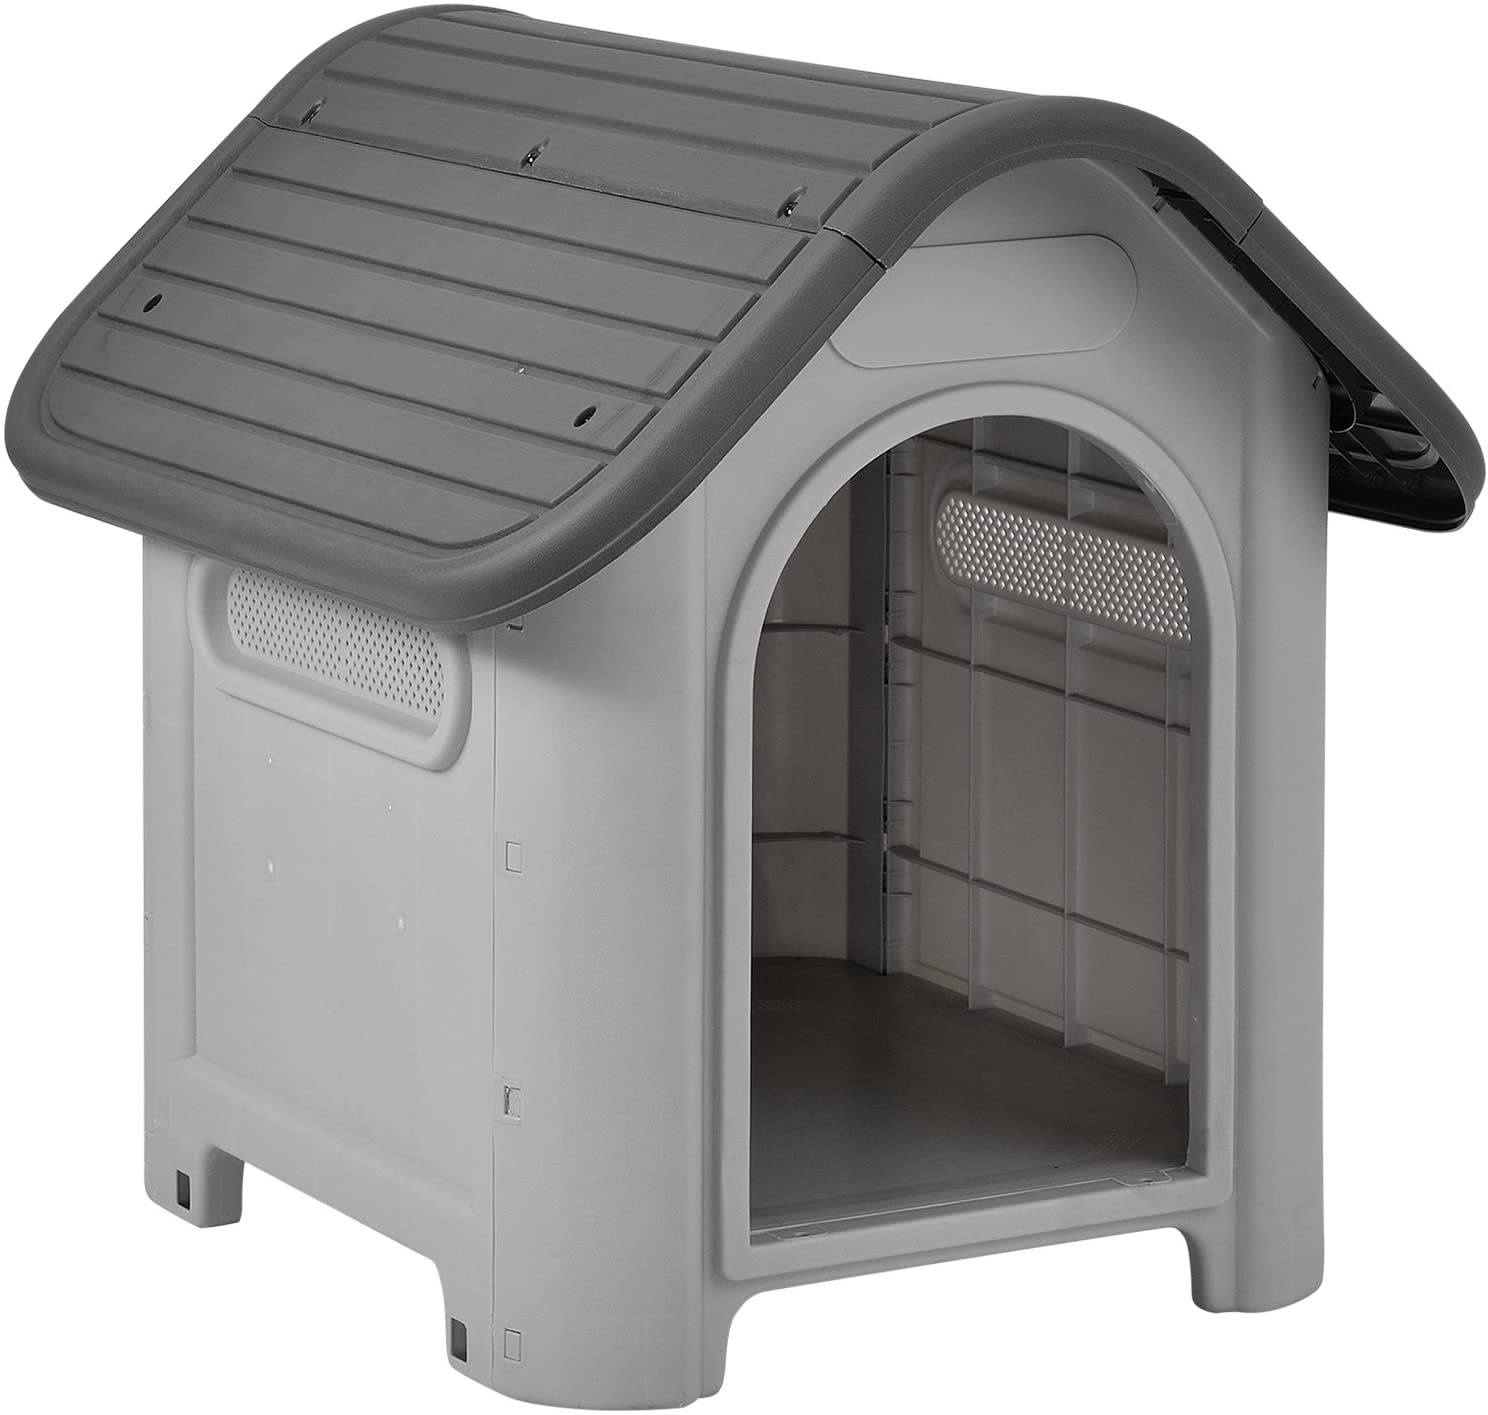  [en.casa] Caseta de plástico para Perros - gris / negro - PVC - 75 x 59 x 66 cm 